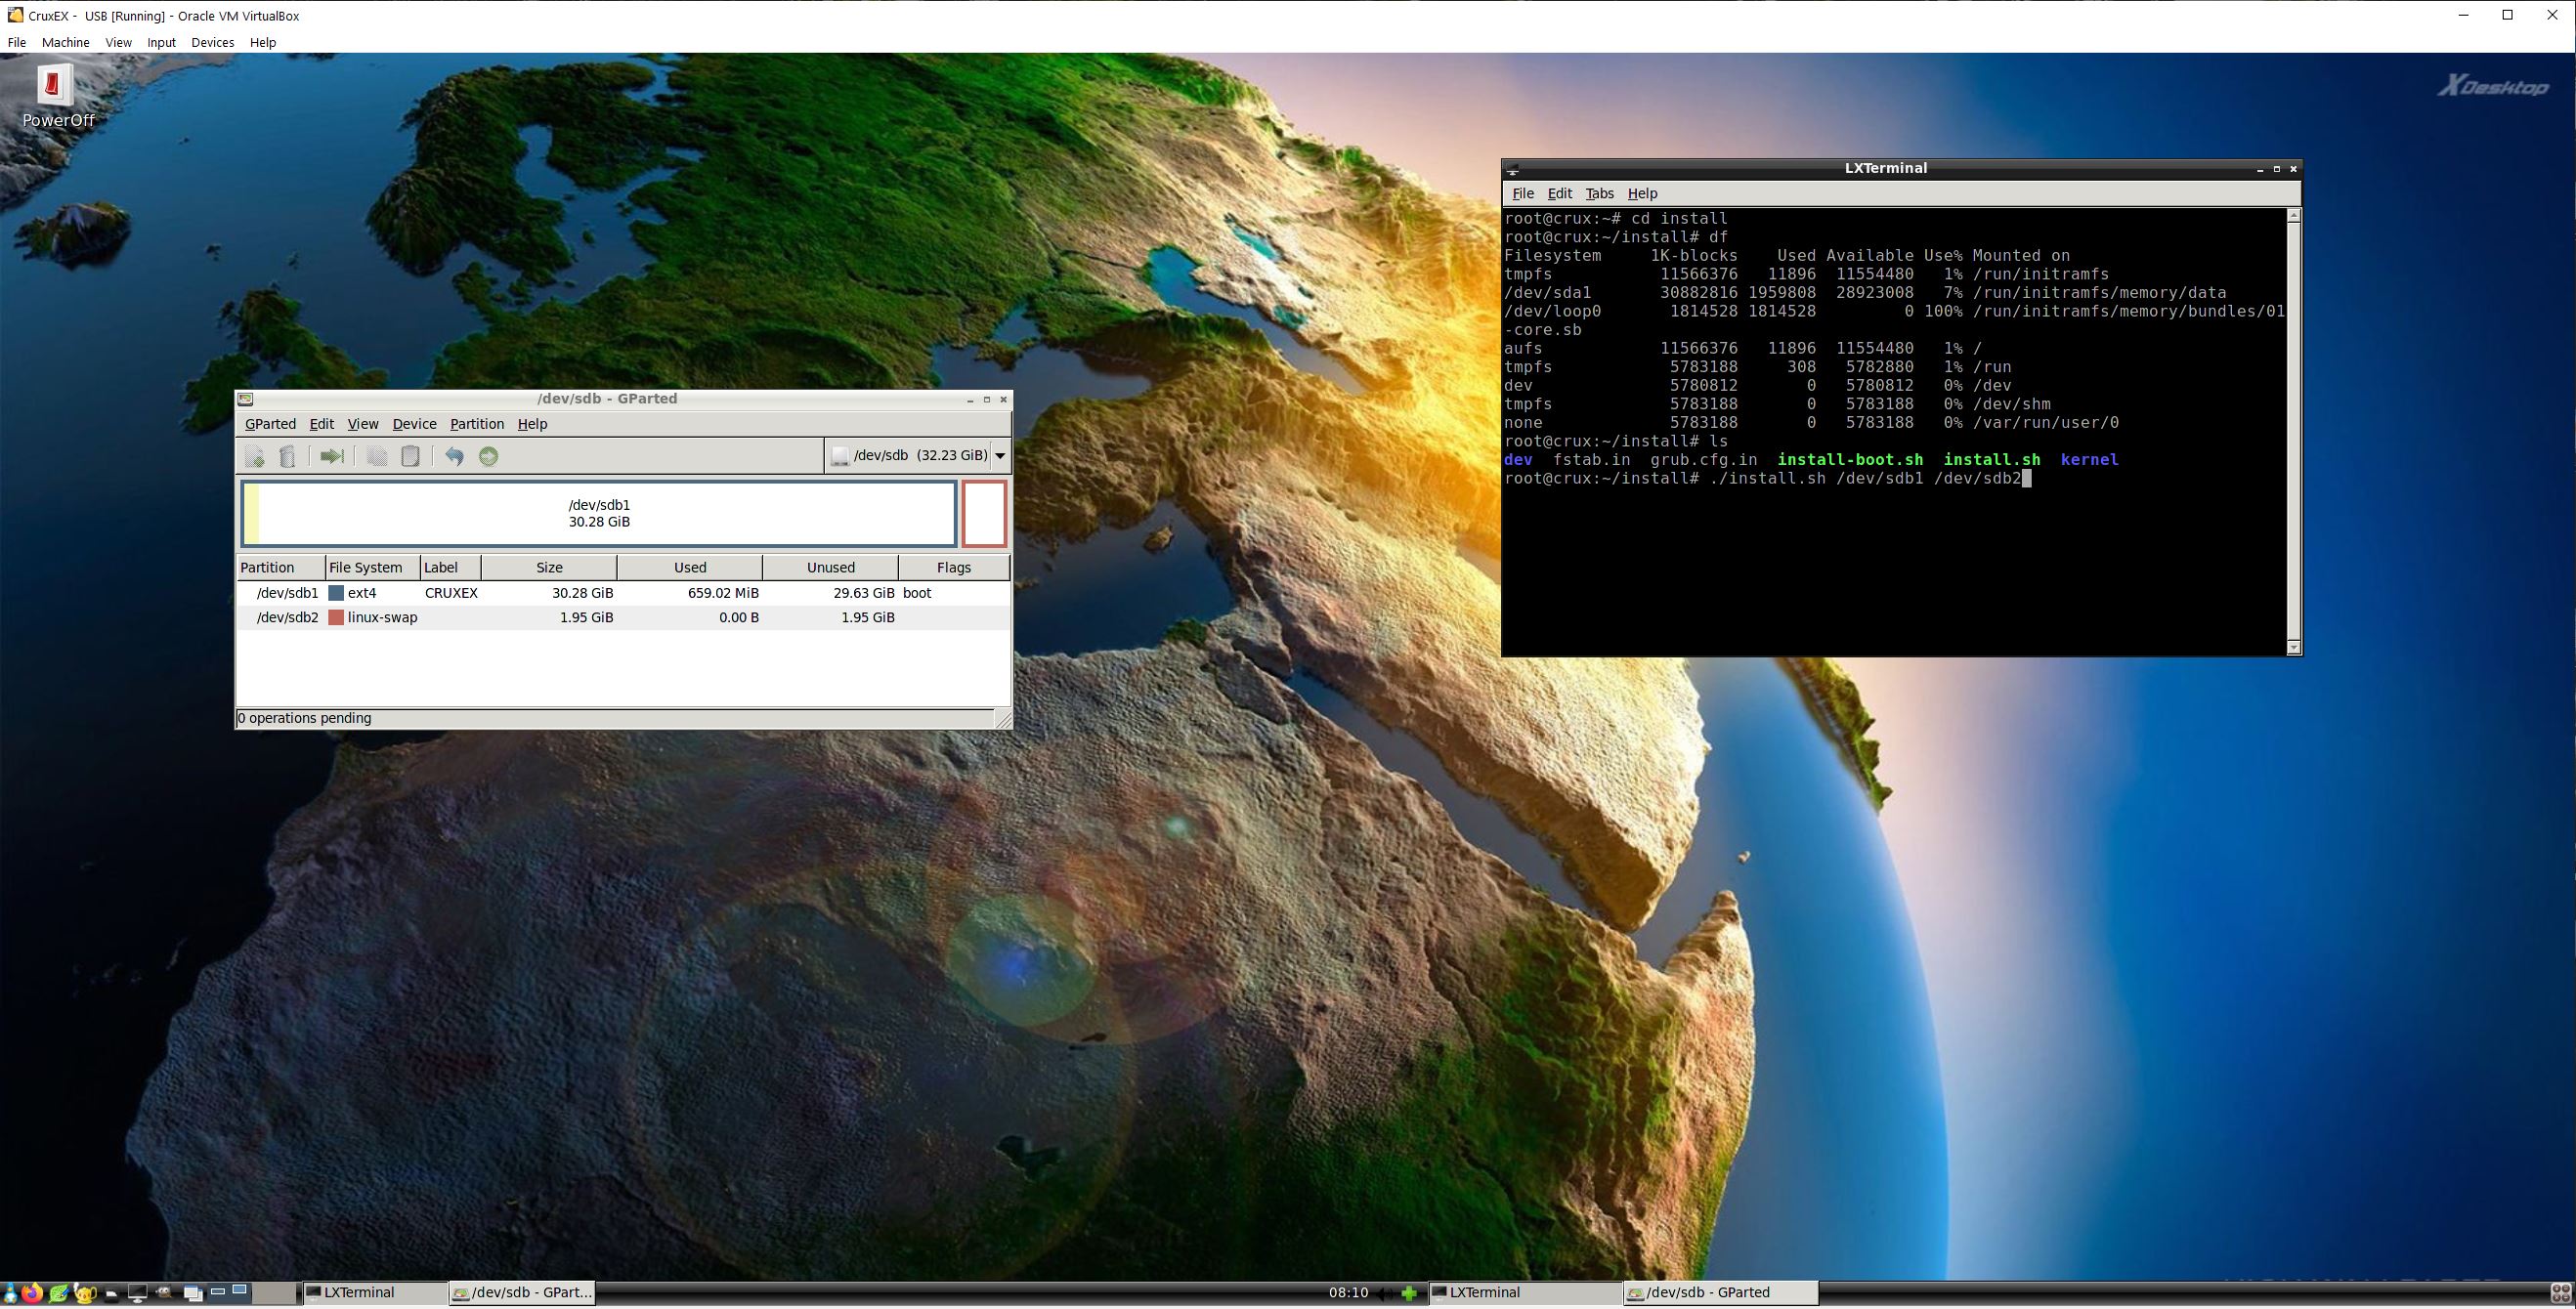 hub-linux-ubuntu/install/overlay/var/lib/squidguard/db/hobby/games